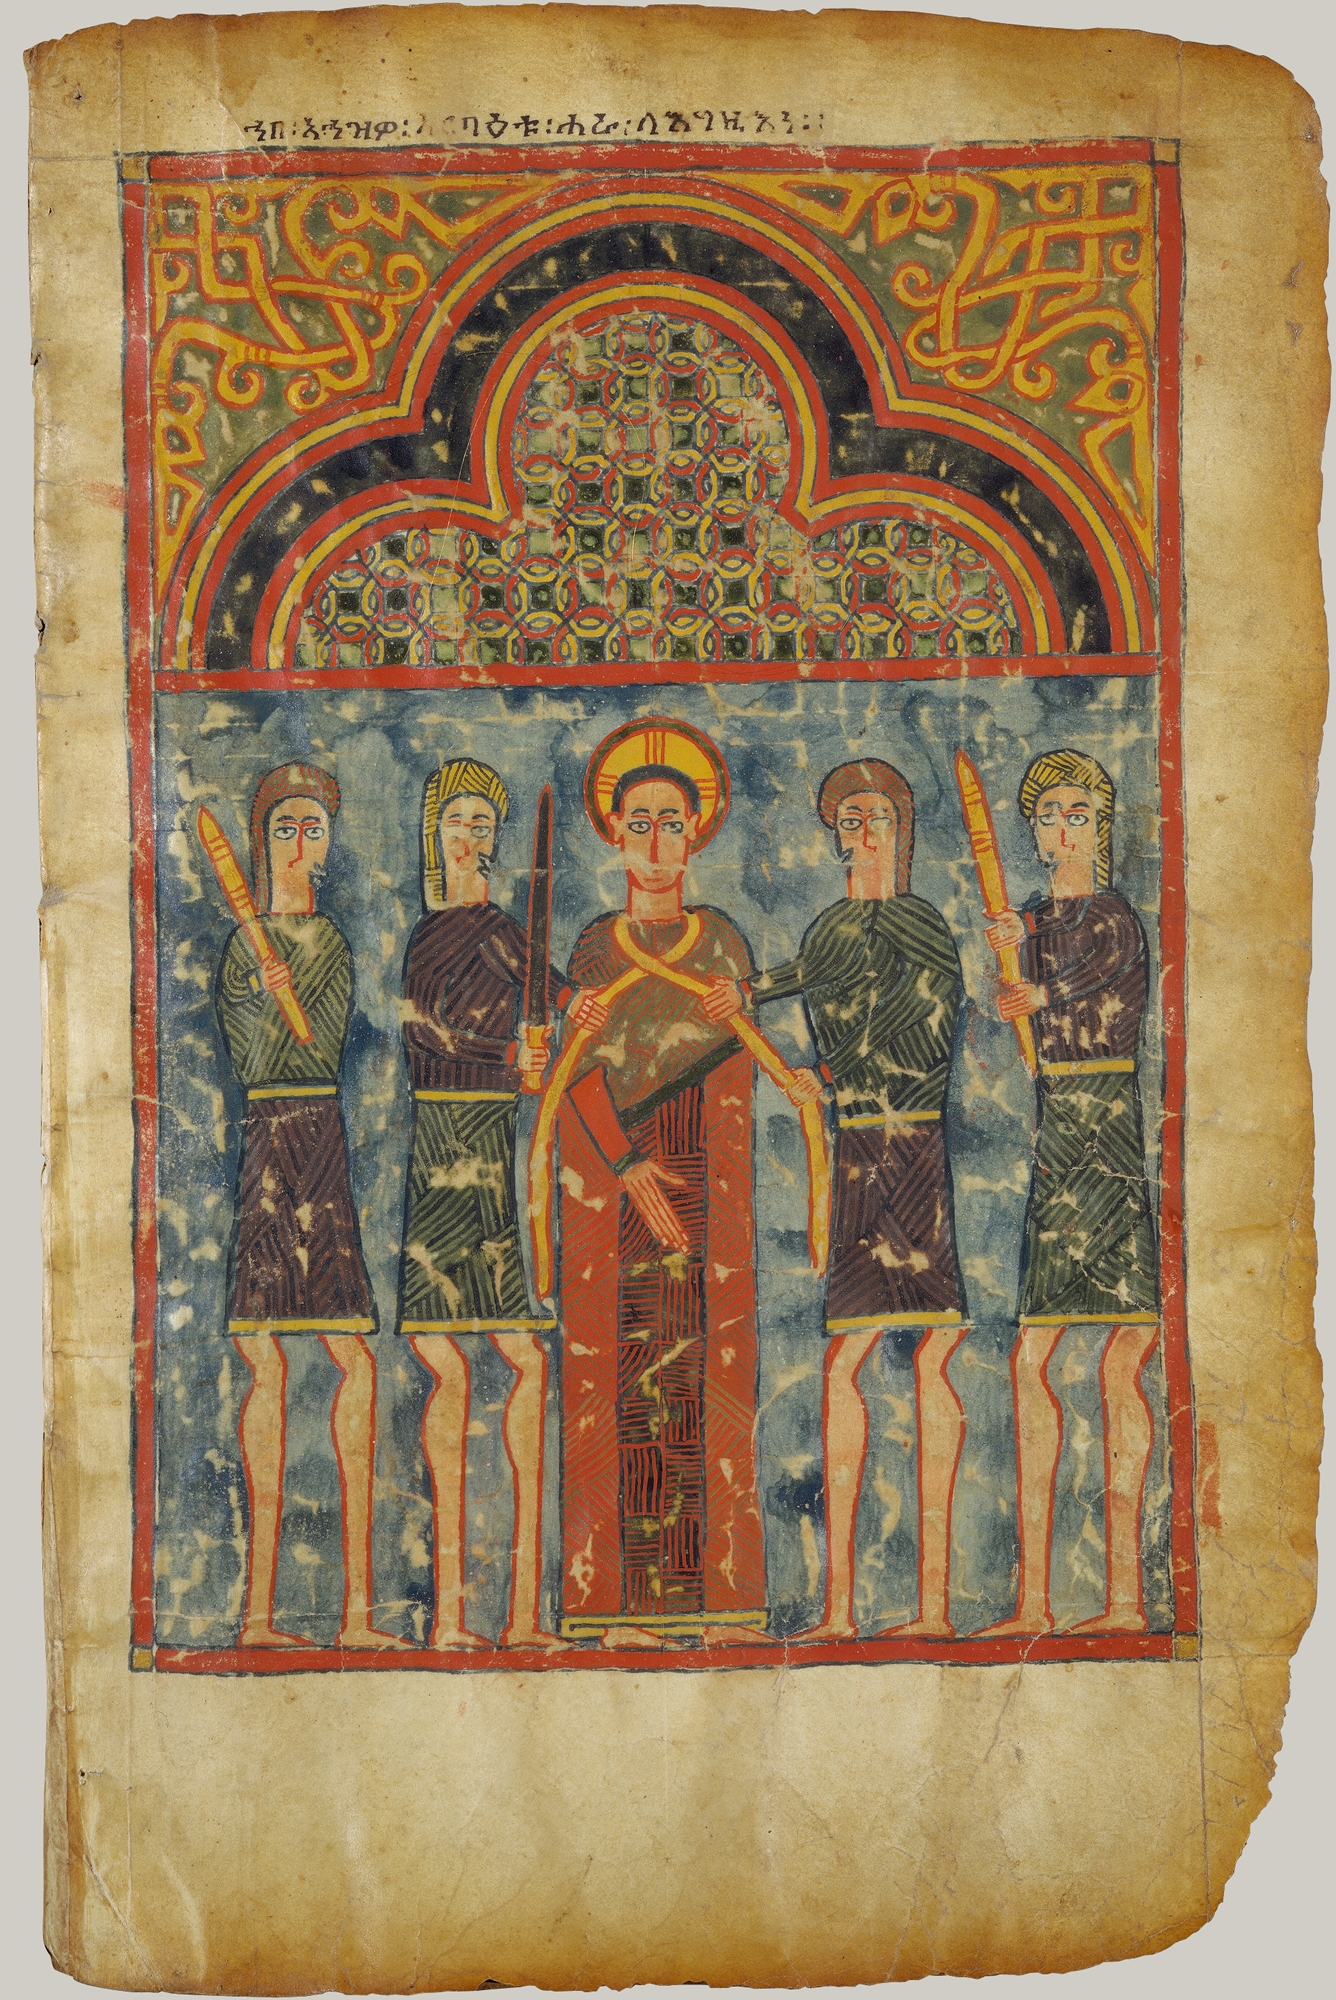 Illuminated Gospel | Amhara peoples | The Metropolitan Museum of Art